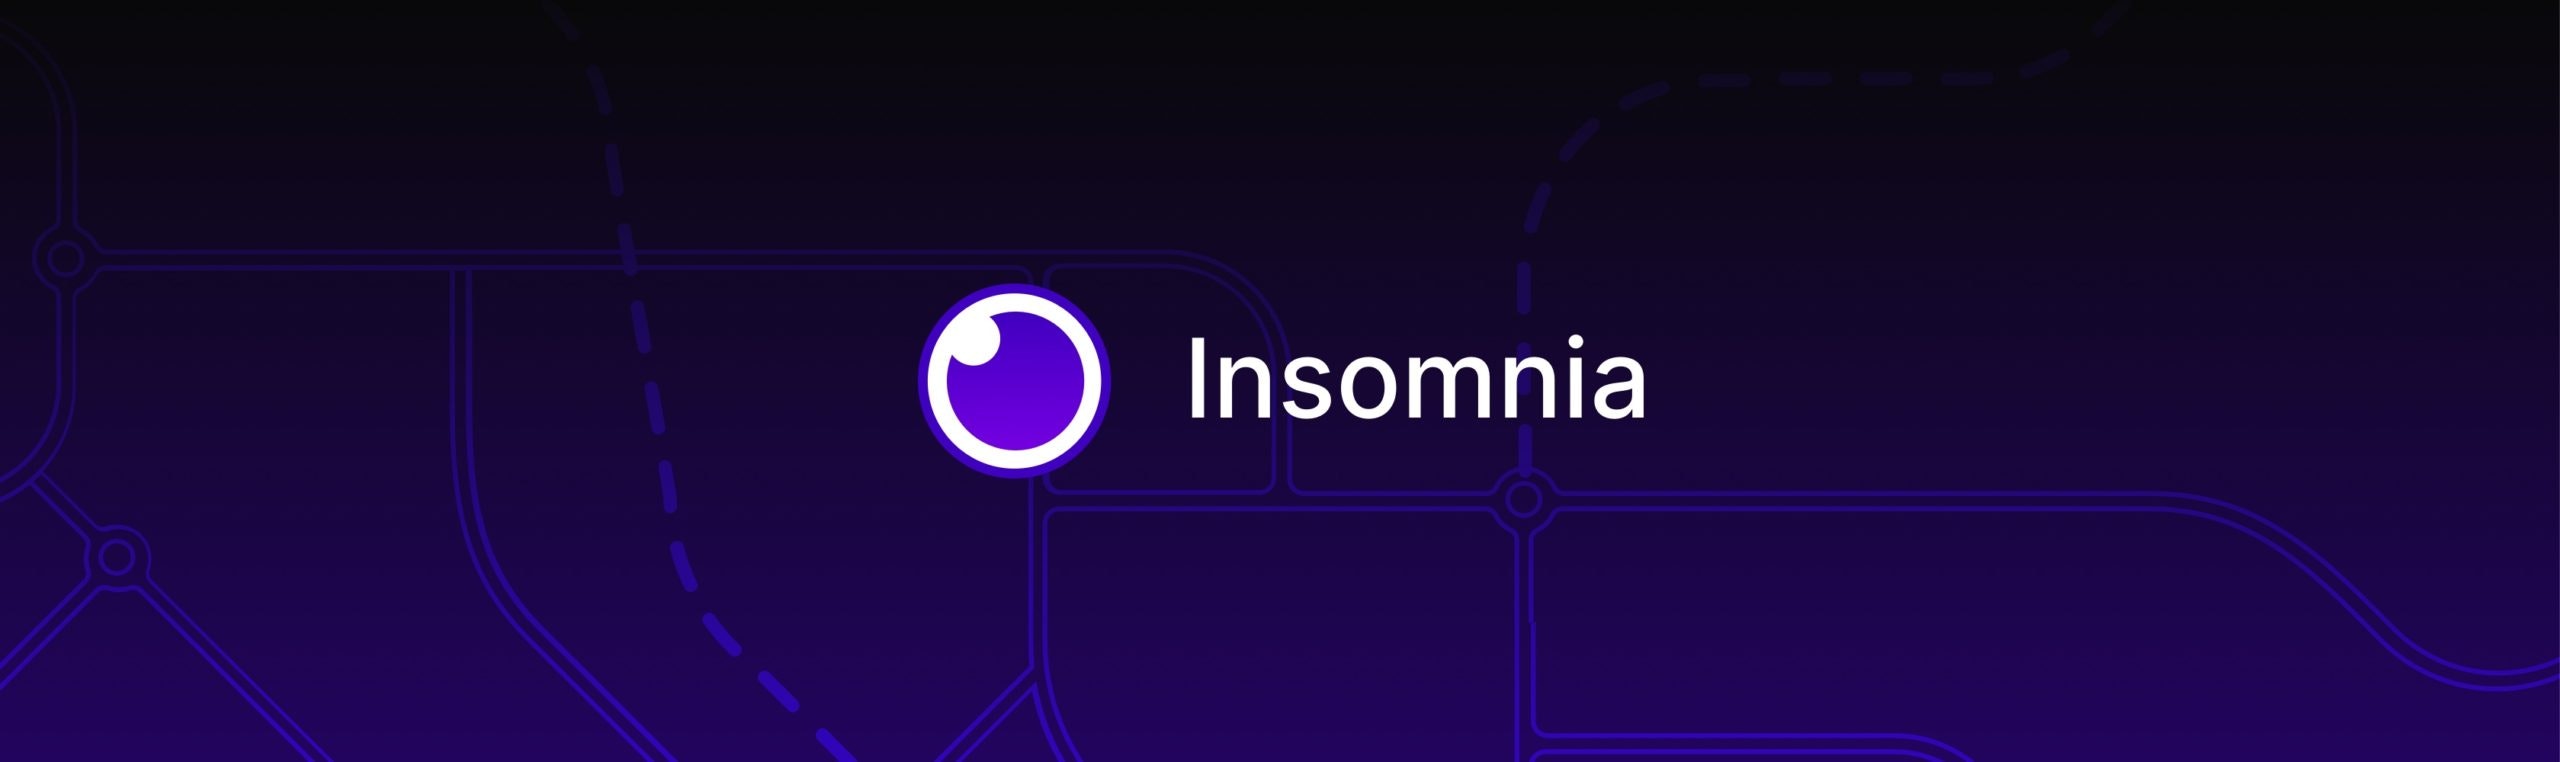 Insomnia Roadmap Cover